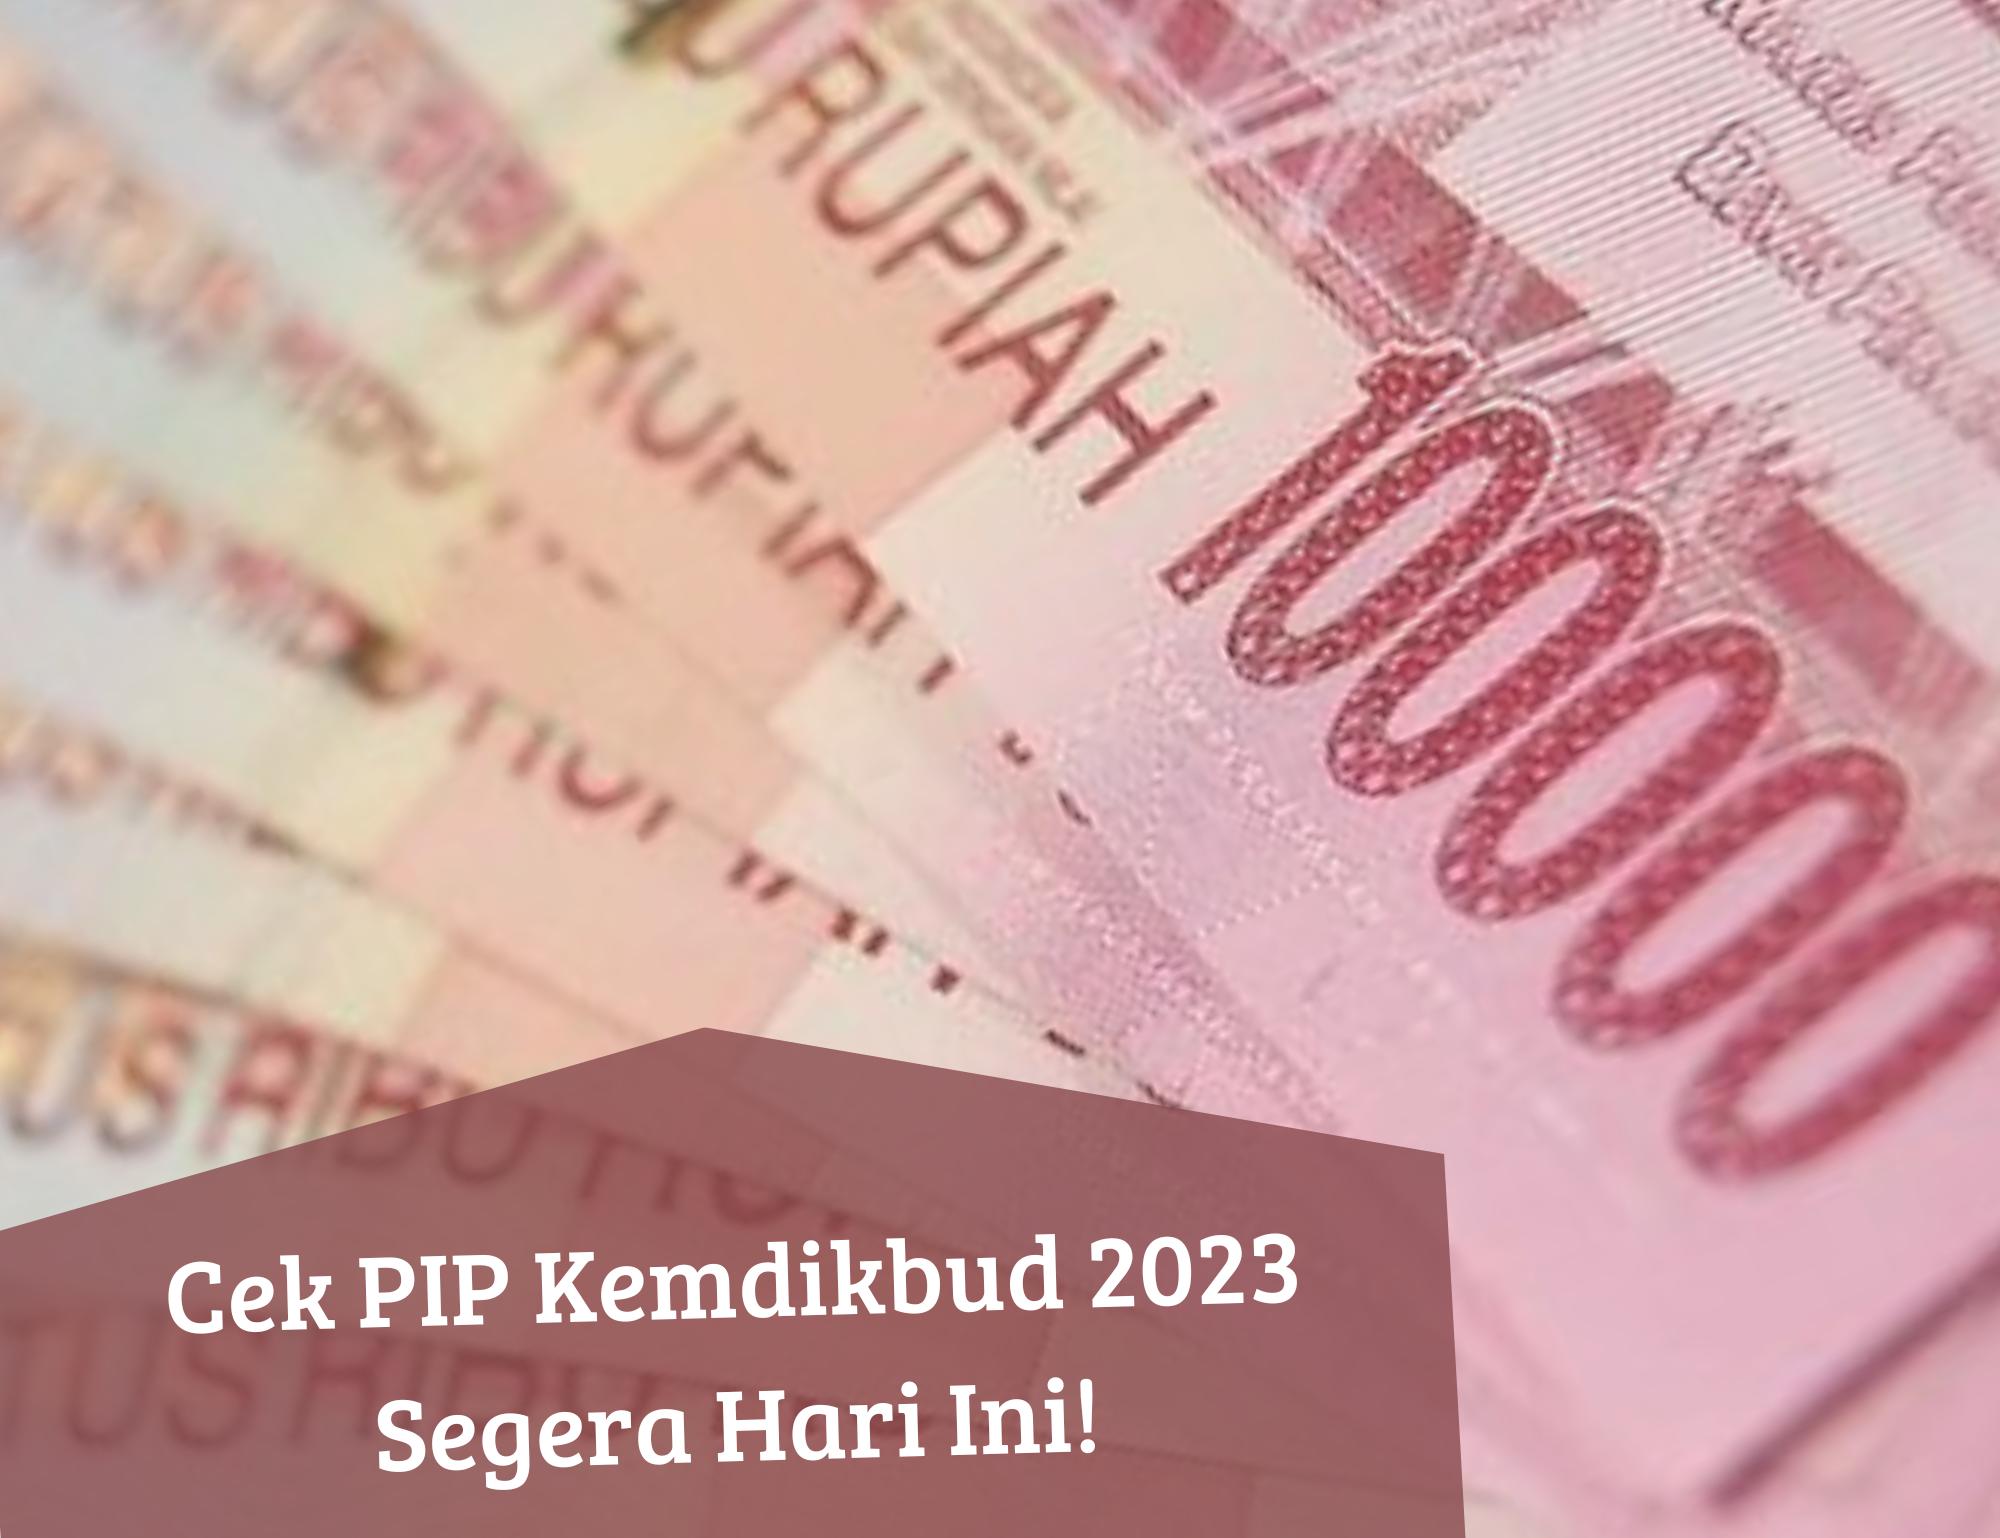 Cair ke Rekening, Cek Bansos PIP Kemdikbud 2023 Segera, Penerima KIP Dapat Uang Bantuan hingga Rp1 Juta